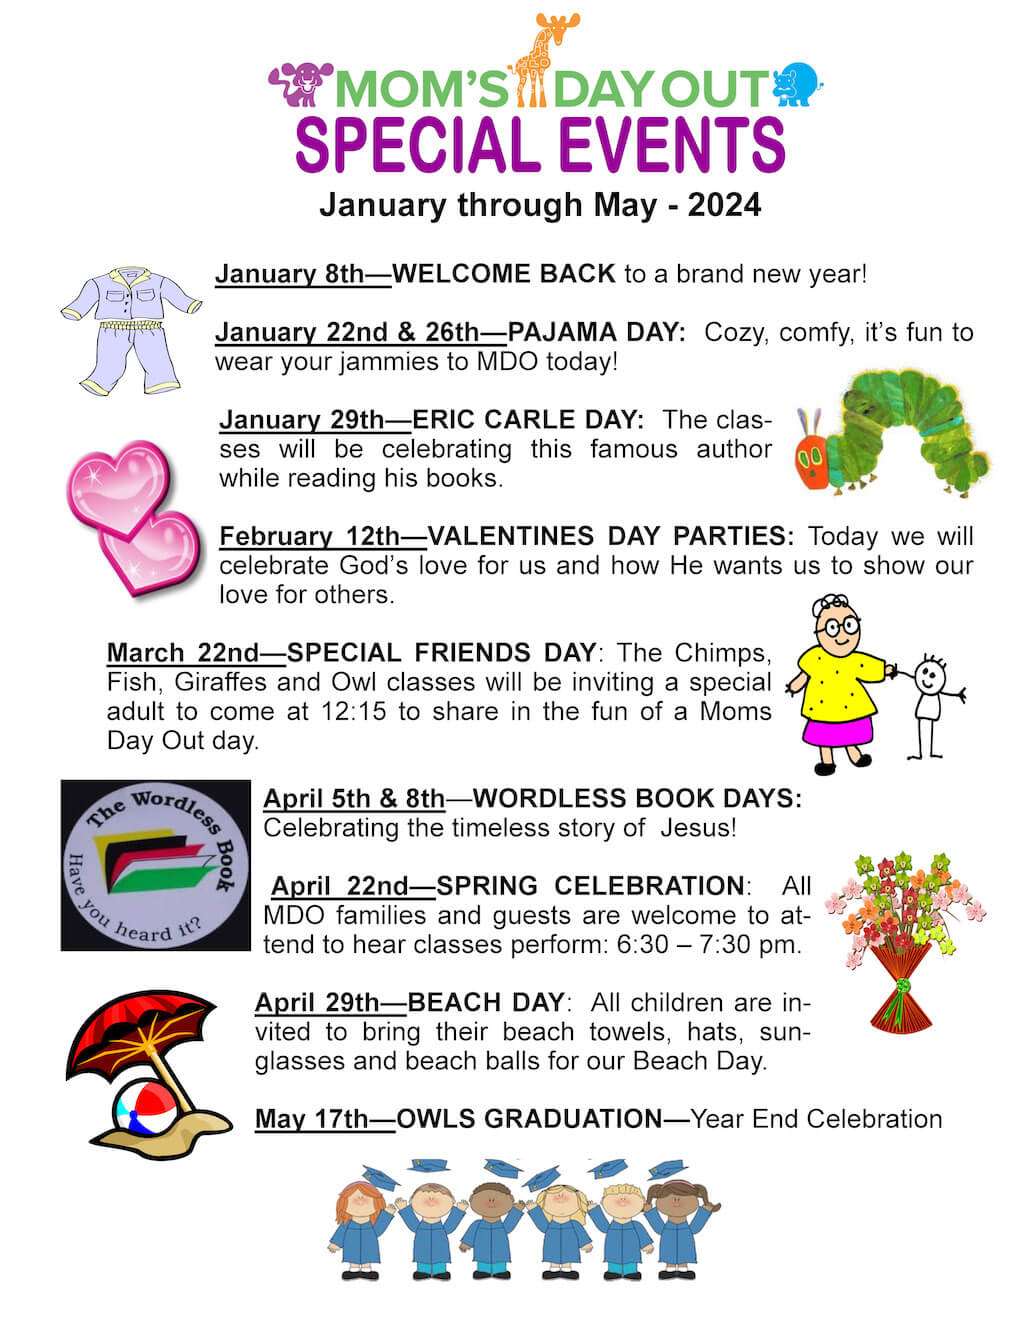 Special Events Calendar Jan thru May 2024